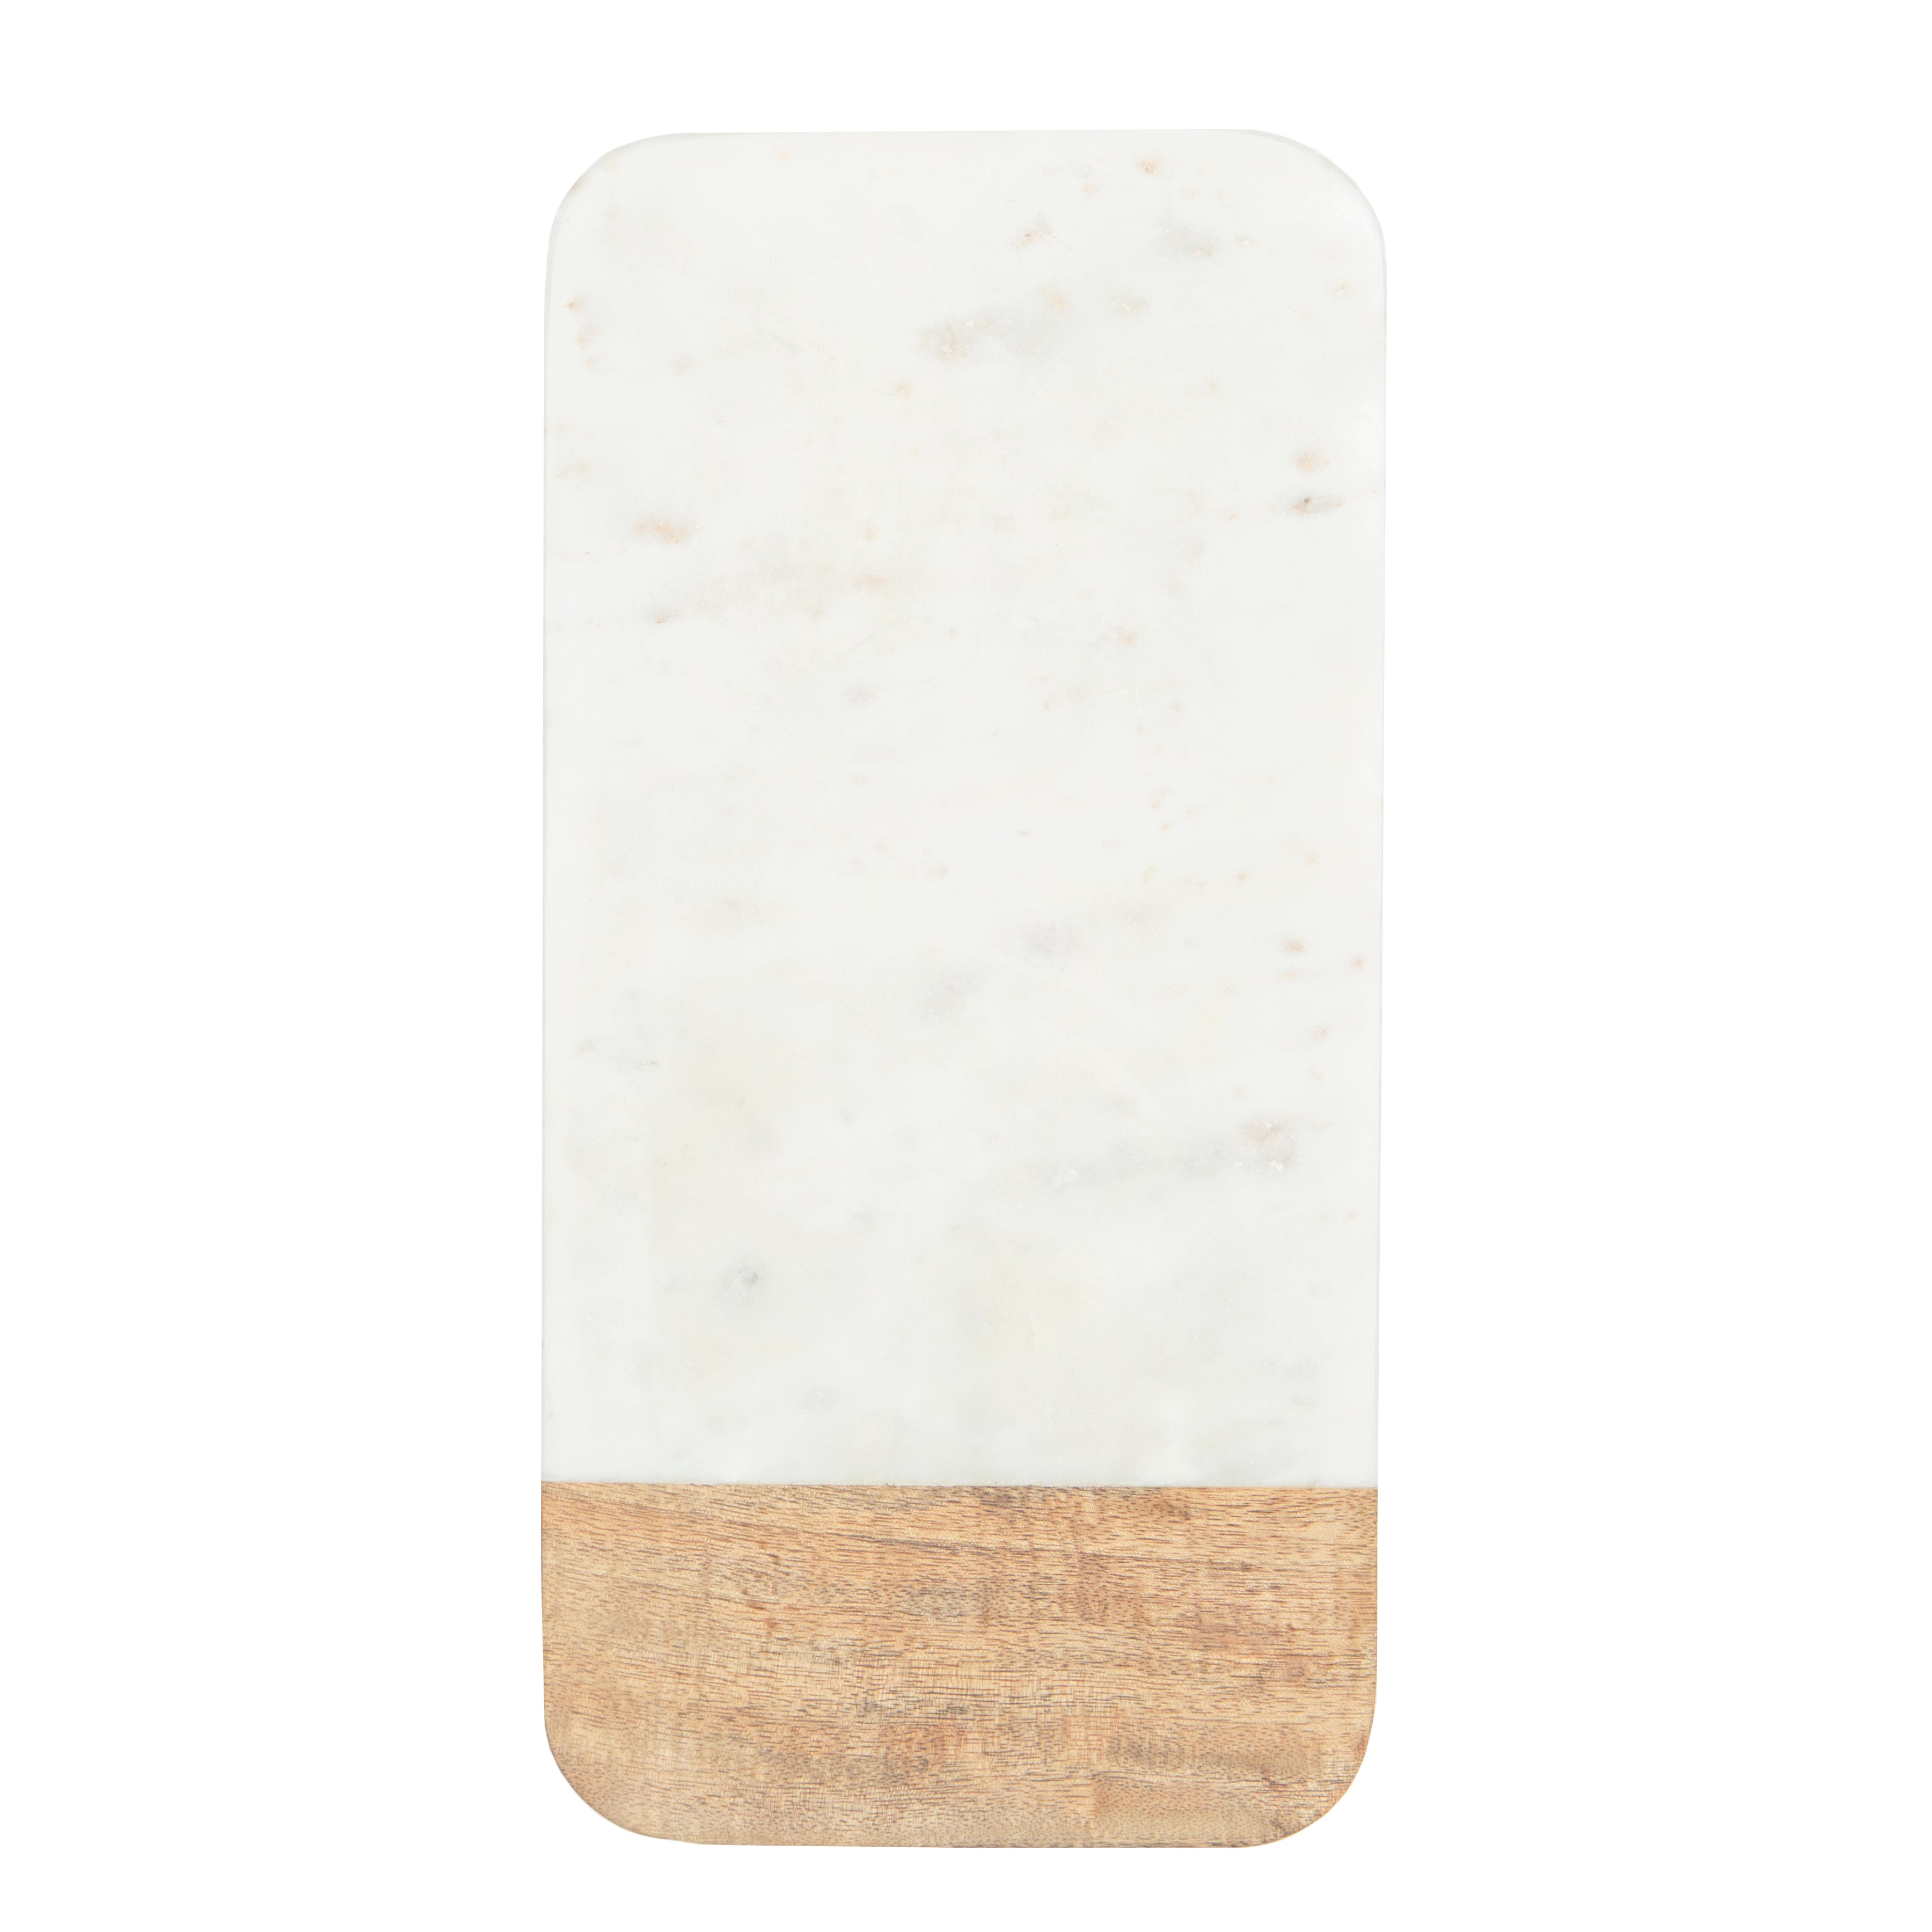 Marble & Wood Cheese Board